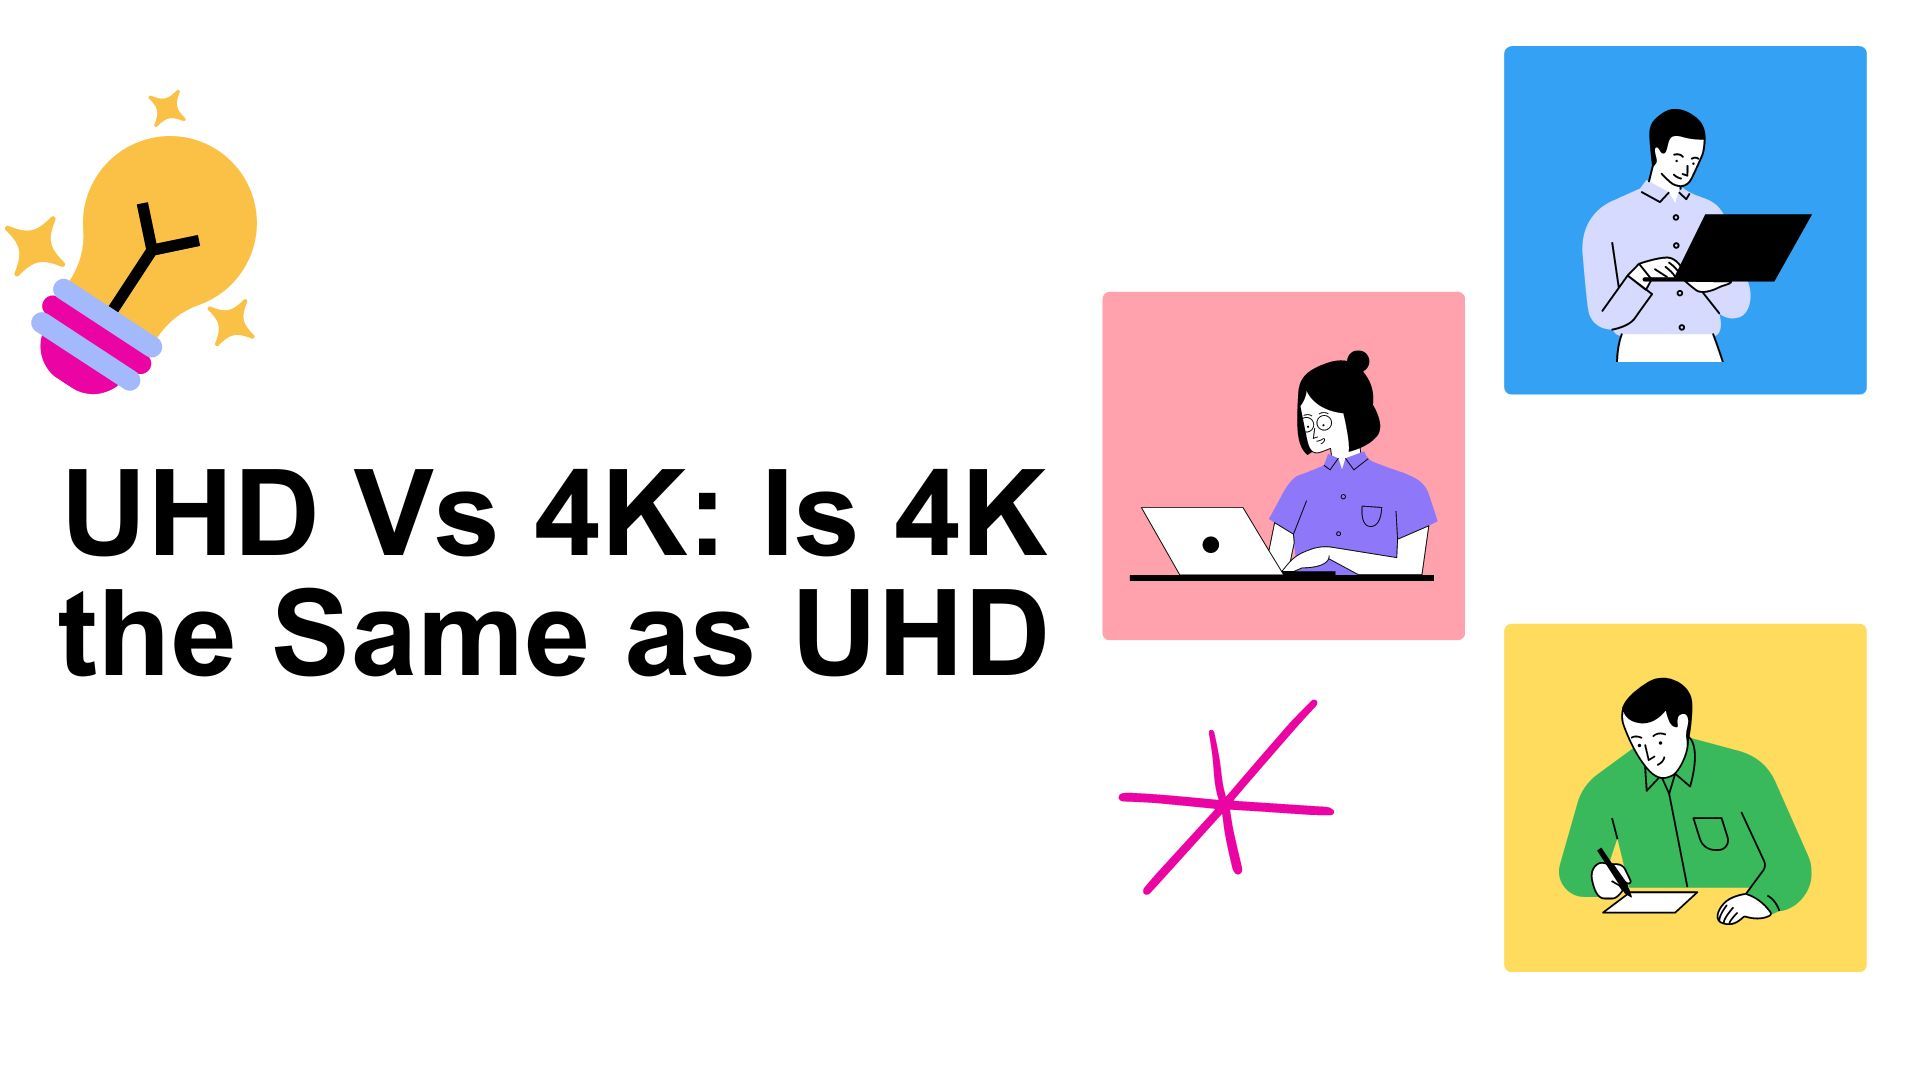 UHD Vs 4K: Is 4K the Same as UHD